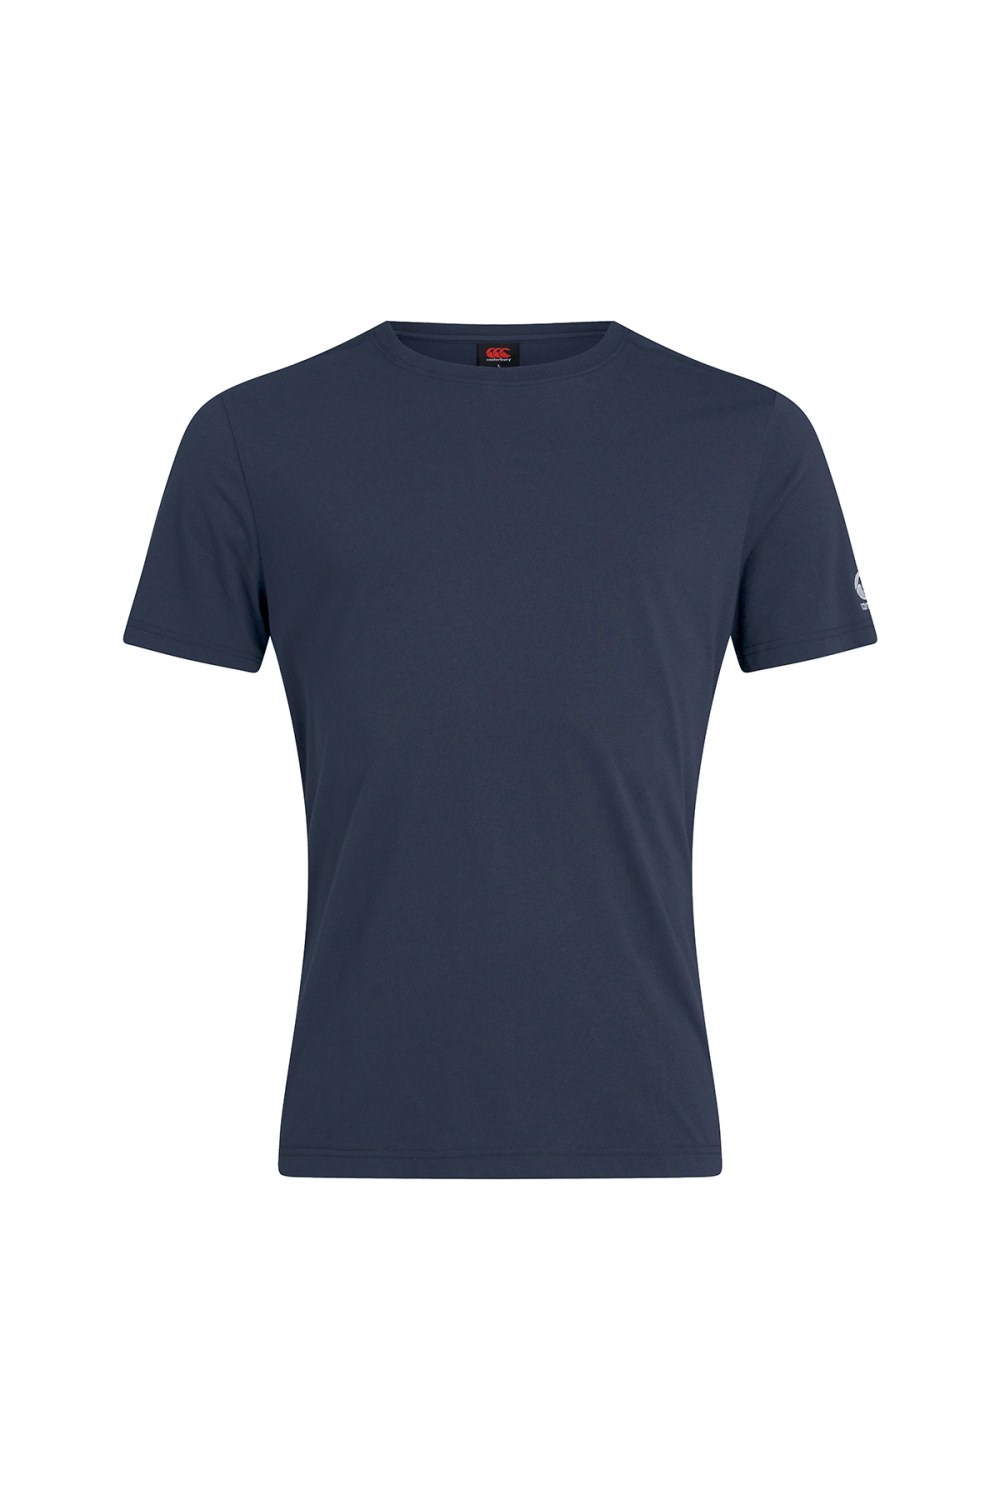 Club Unisex Plain T-shirt -